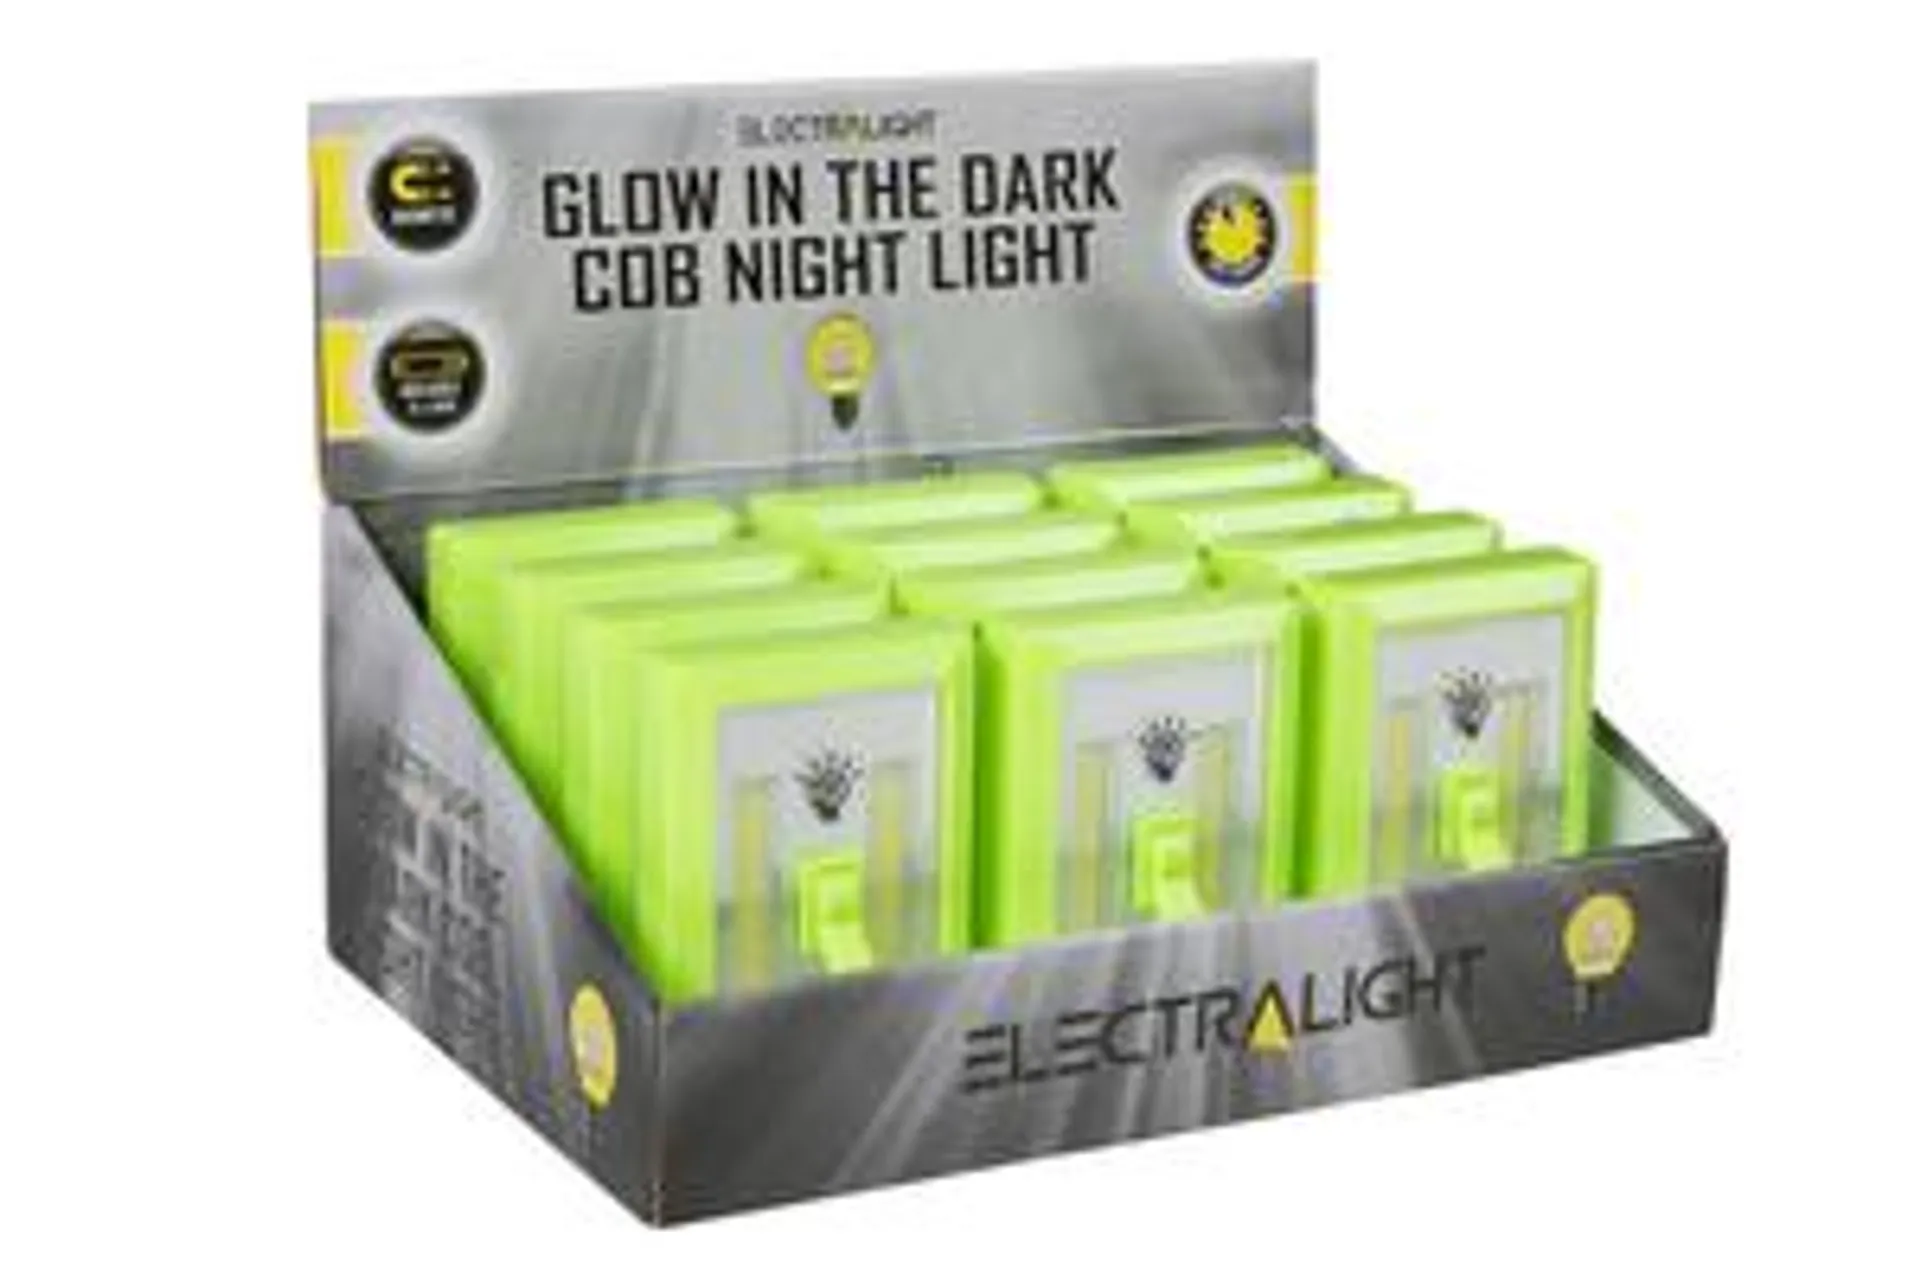 Electralight Glow in the dark COB Night Light